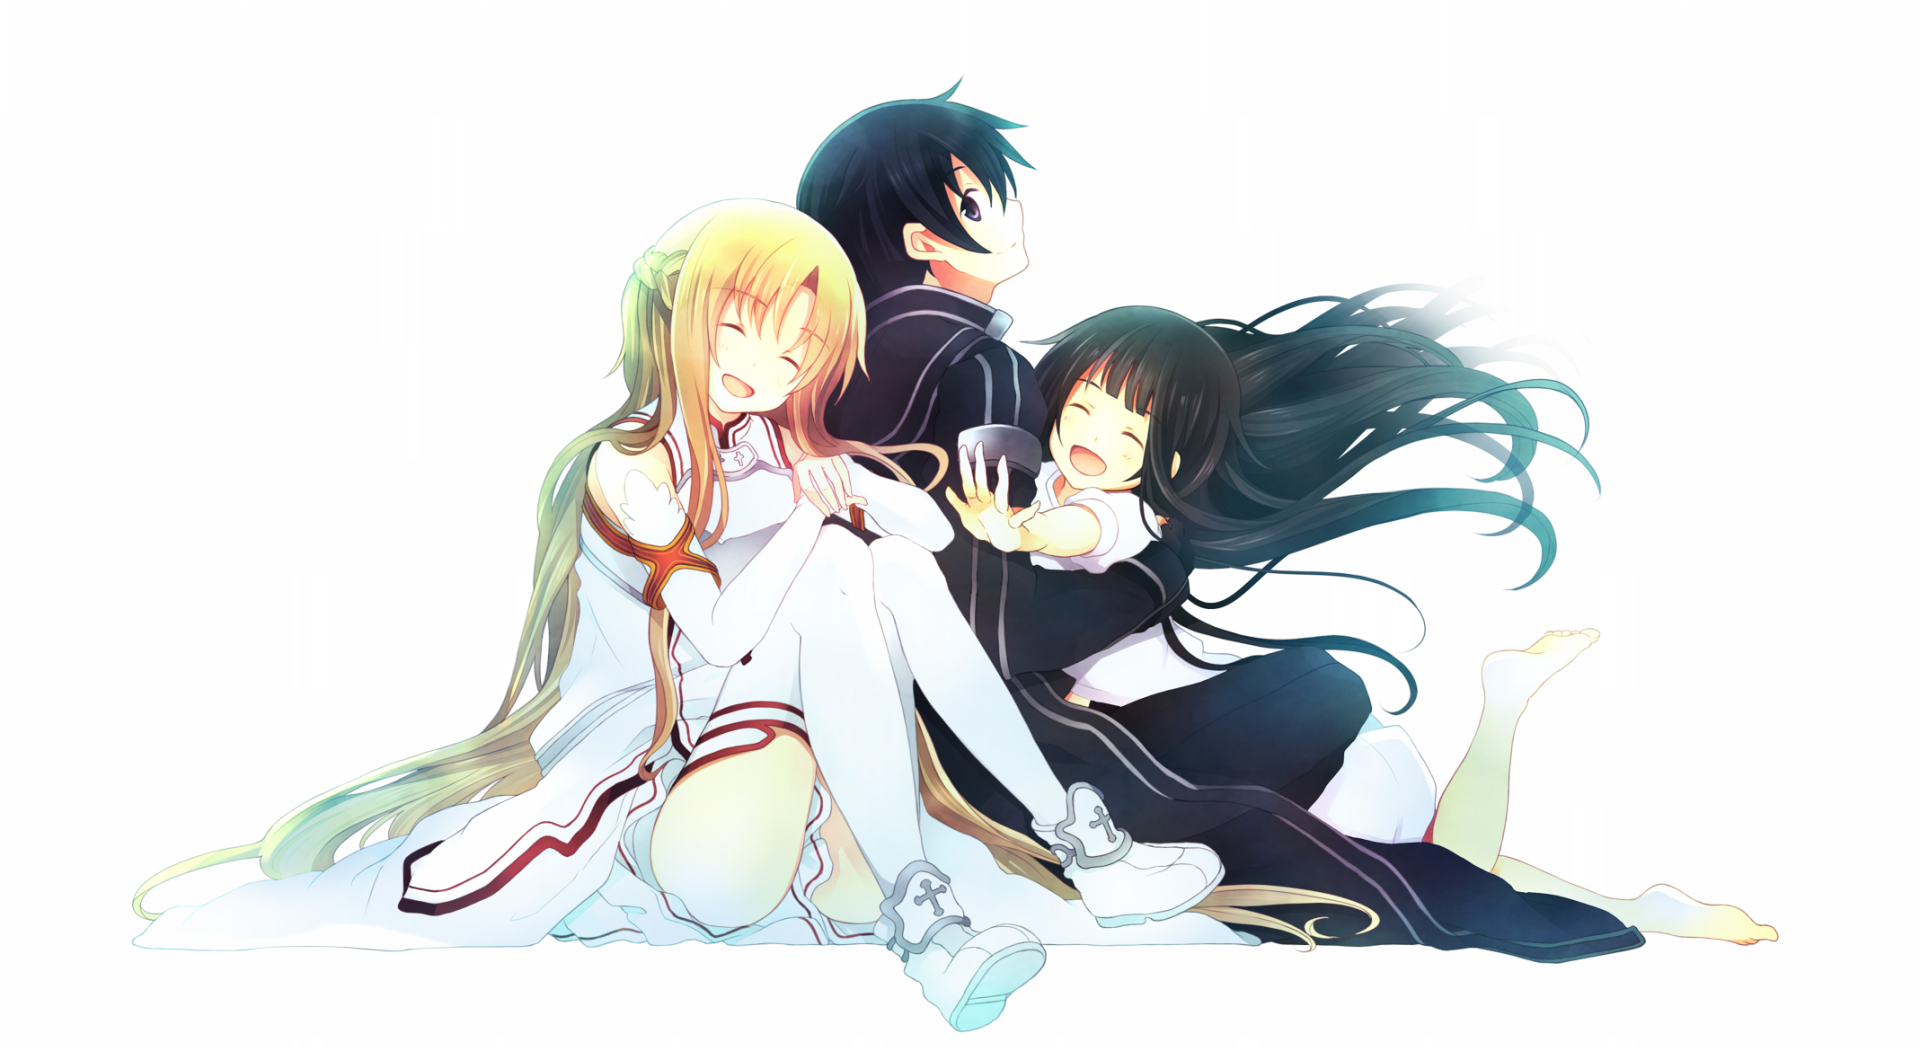 Kirito,Asuna and Yui